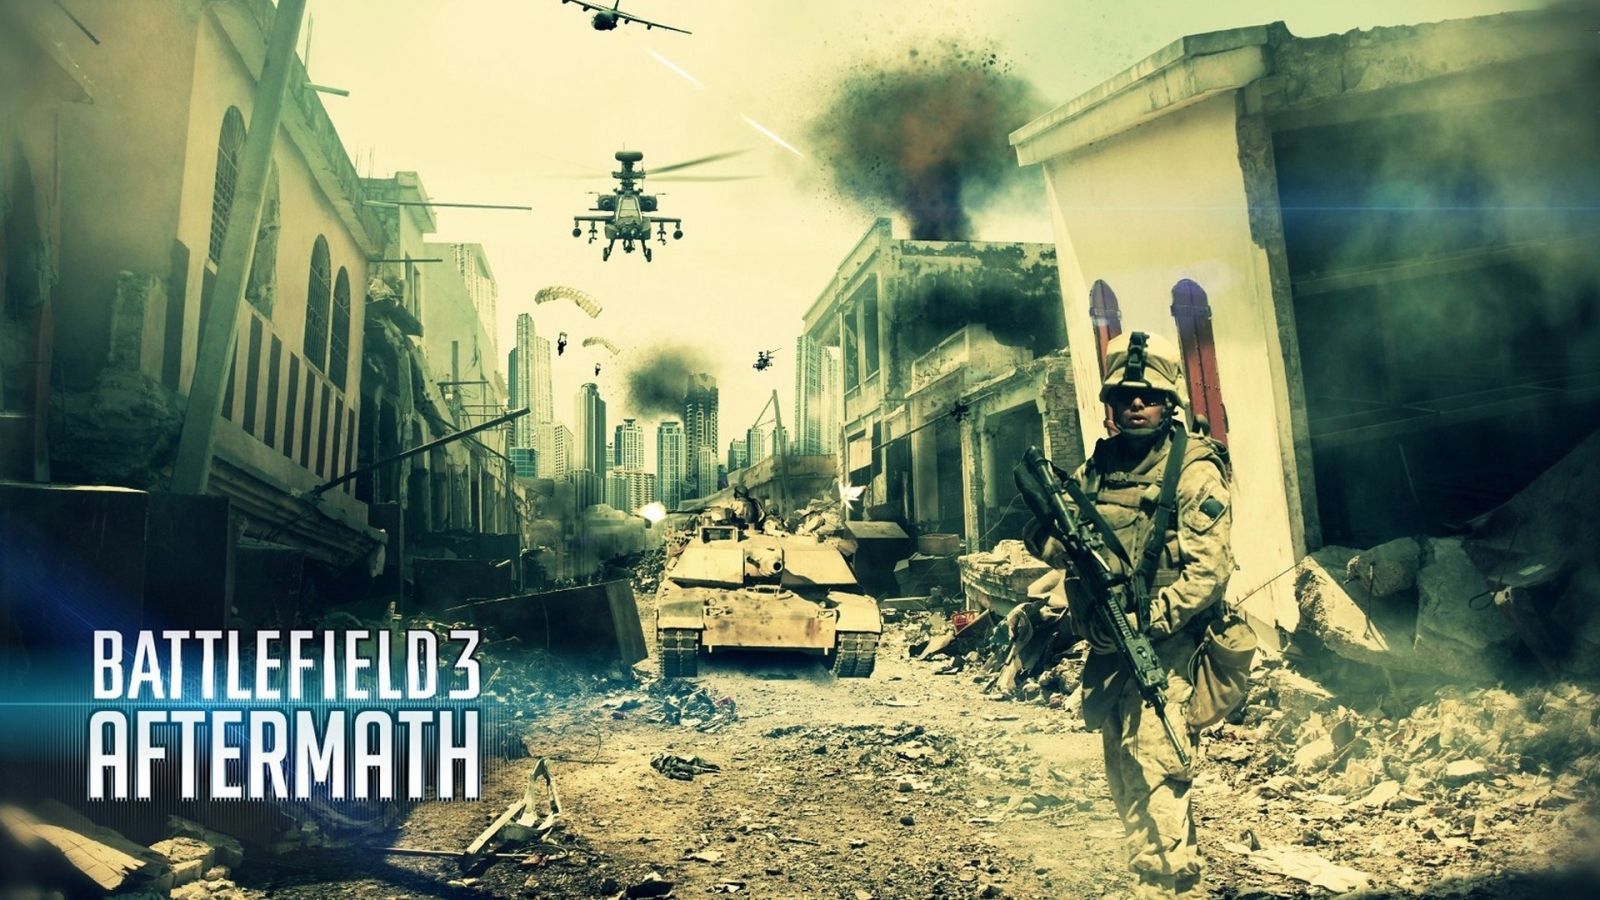 Battlefield 3 Aftermath for 1600 x 900 HDTV resolution